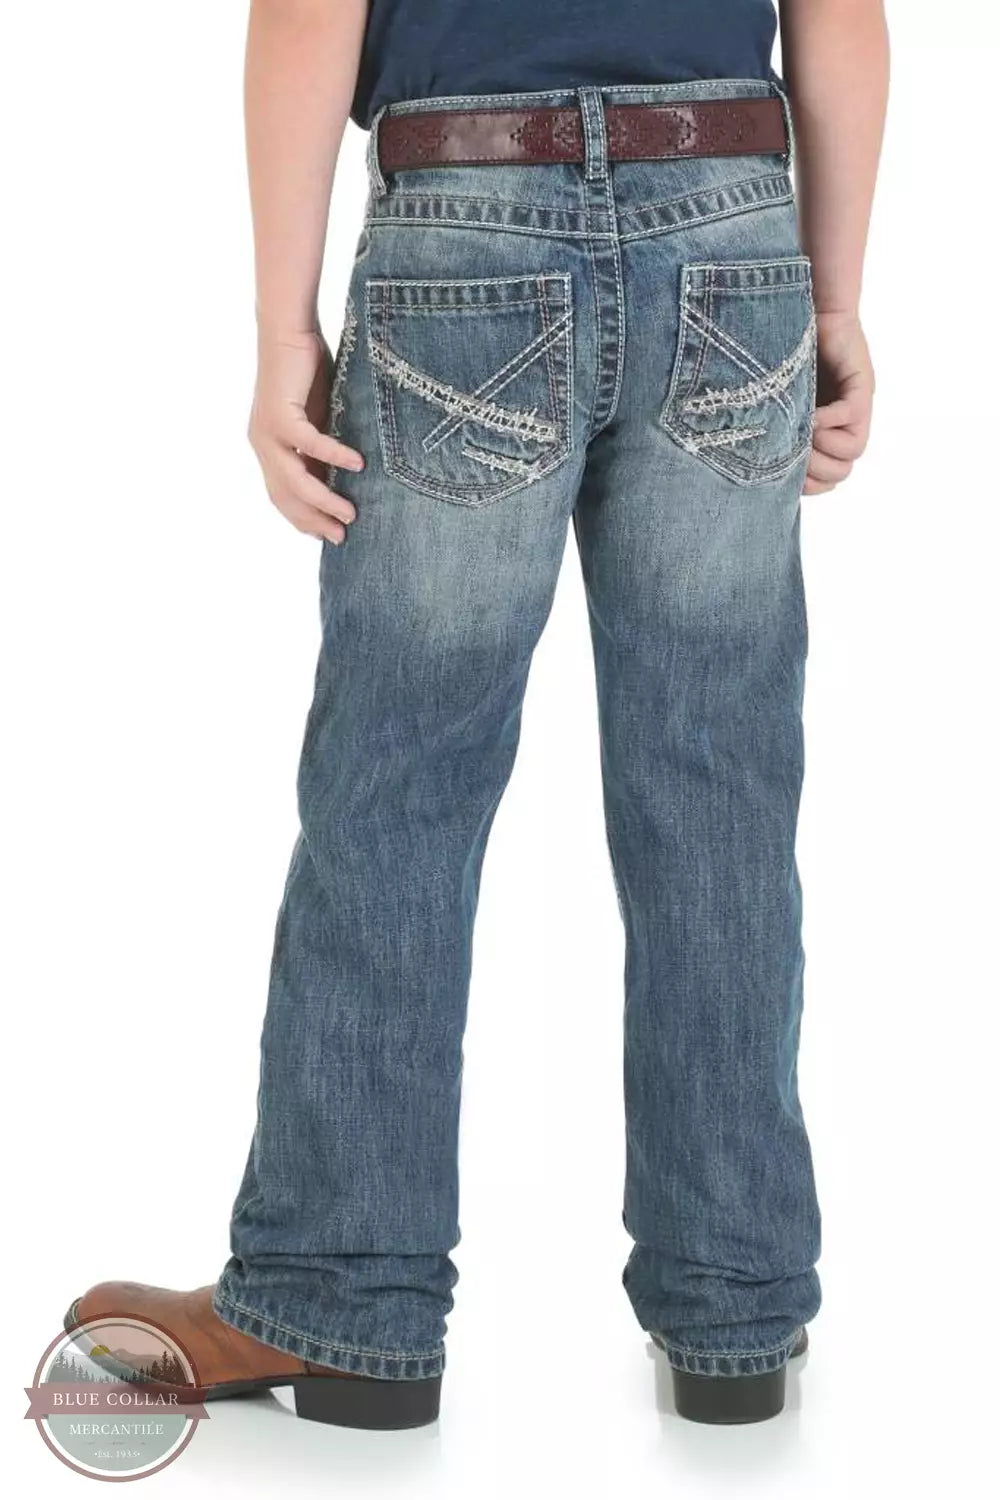 Wrangler 42BWXBB Kids 20X Vintage Bootcut Slim Fit Jean in Breaking Barriers Back View